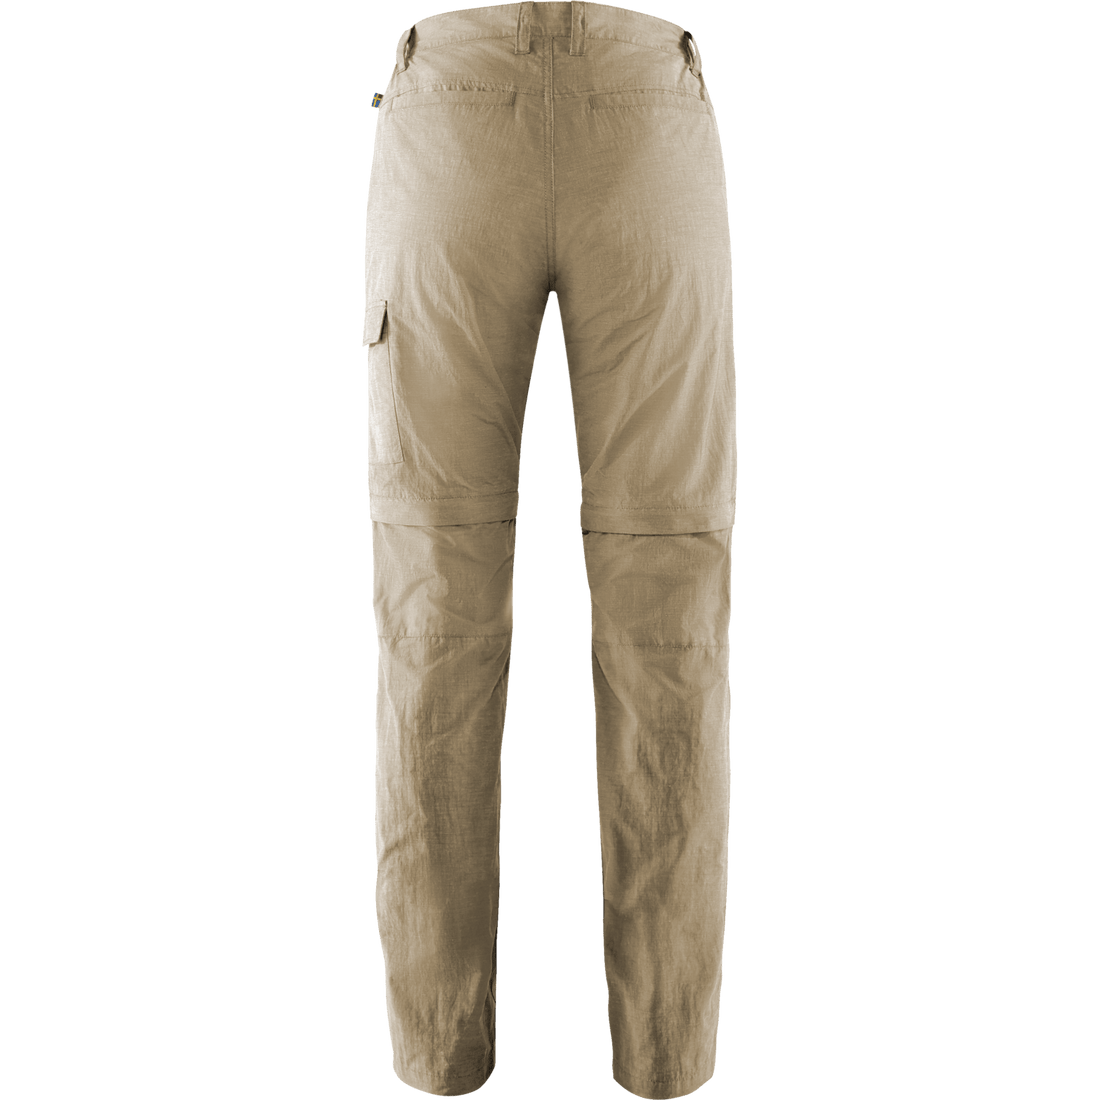 Regatta Xert Stretch Z/O II Pant short grey Size 42-short 2017 sport pants  : Amazon.co.uk: Fashion